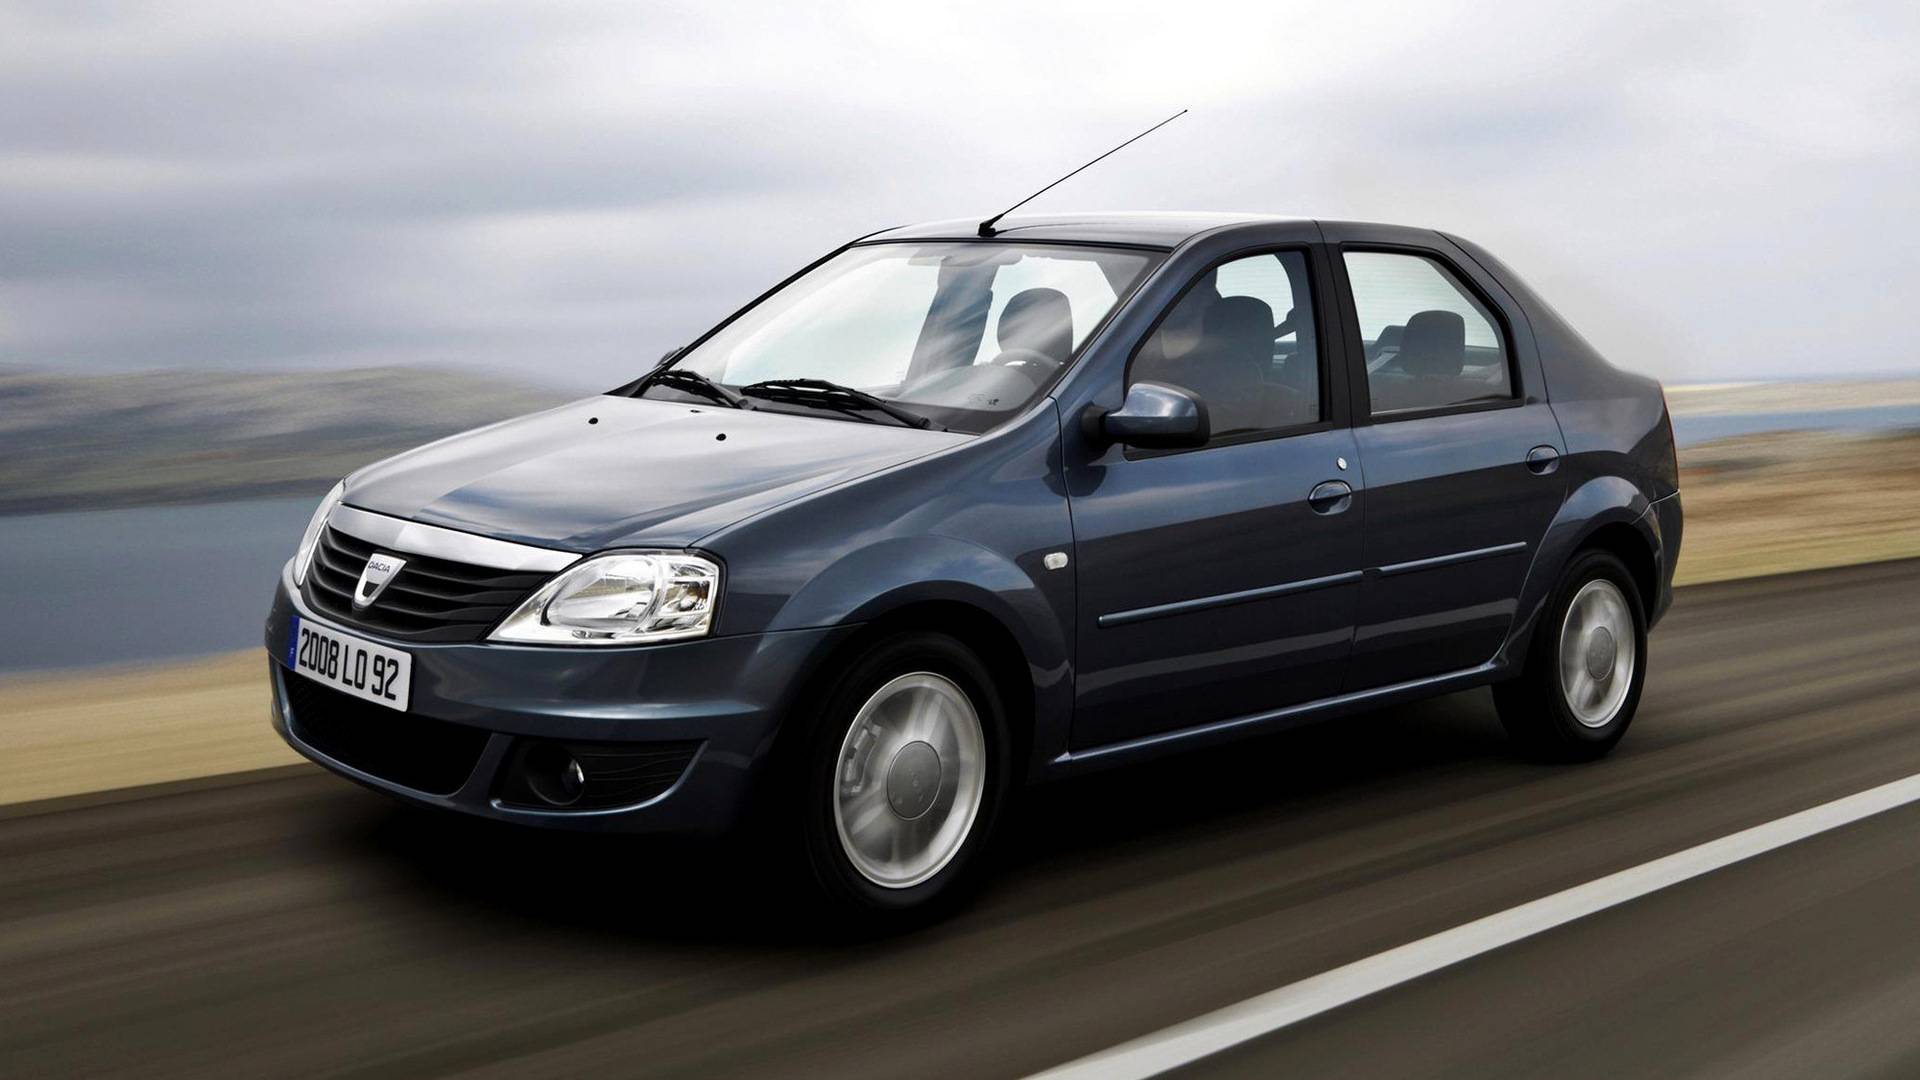 Renault logan 1.6 (c 2010 по 2013) — технические характеристики автомобиля